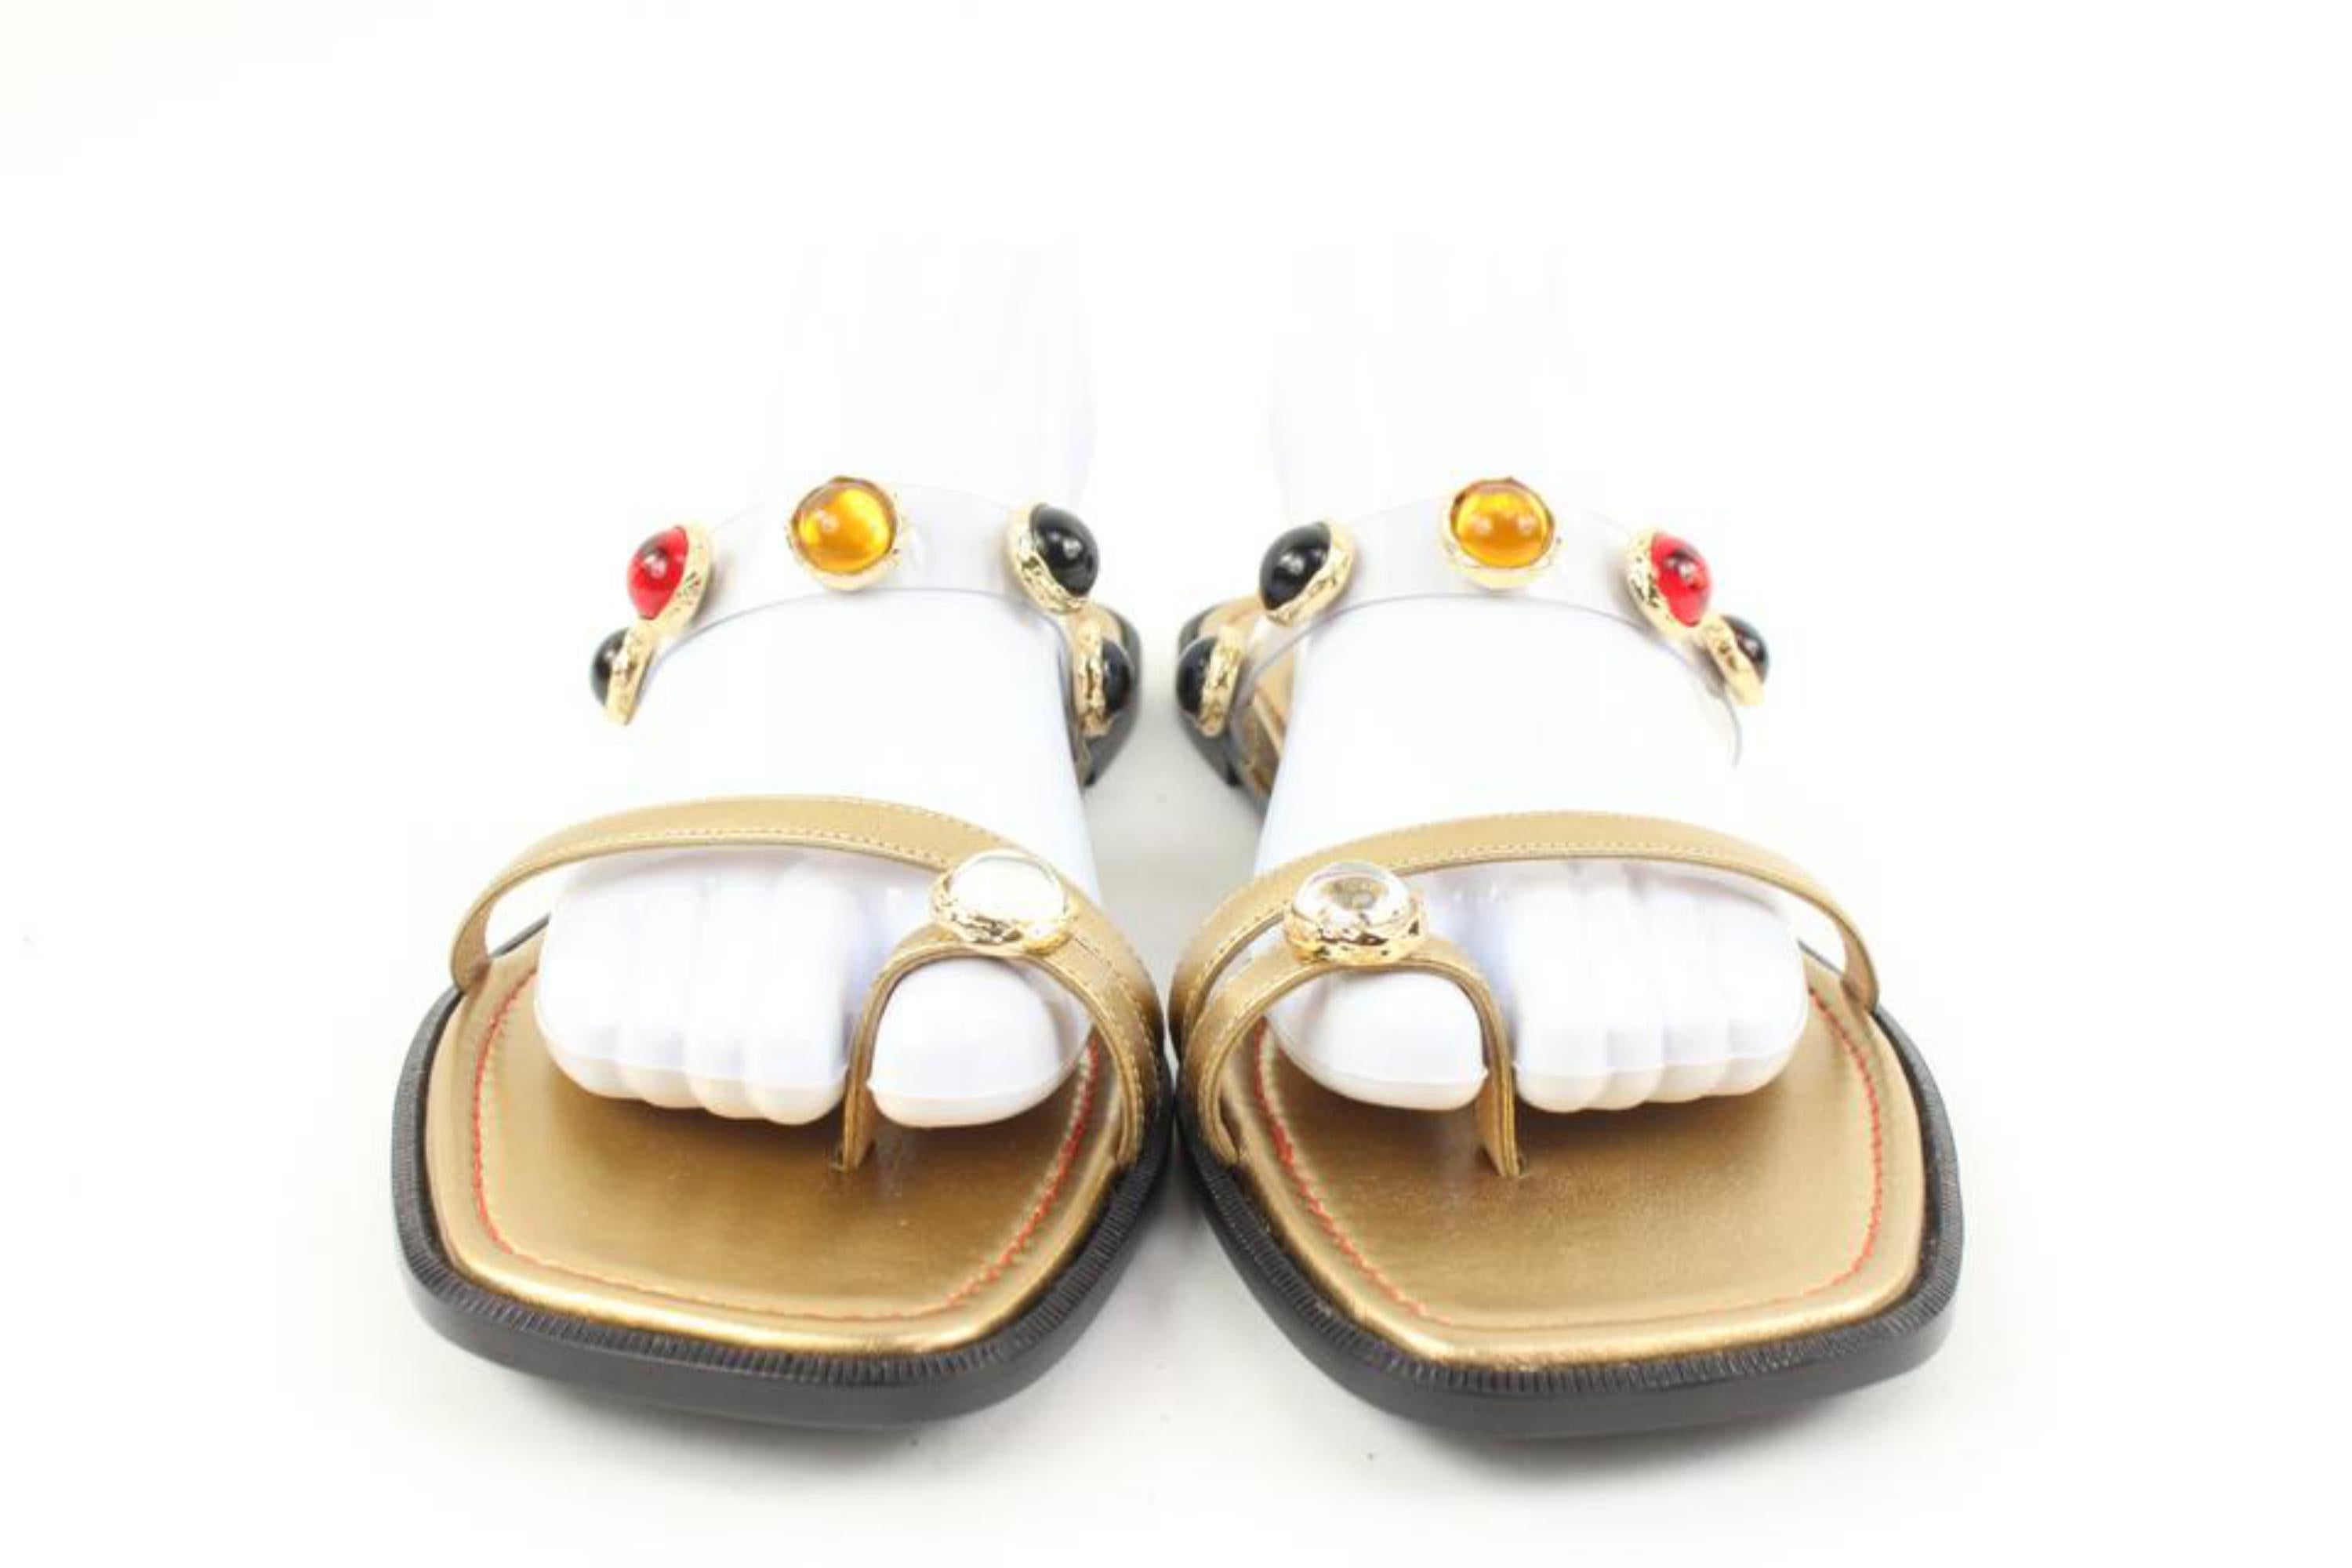 Women's Nodaleto Sz 38 $735 Bulla Salem Flat Jeweled Gold Sandals 39n31s 40n321s